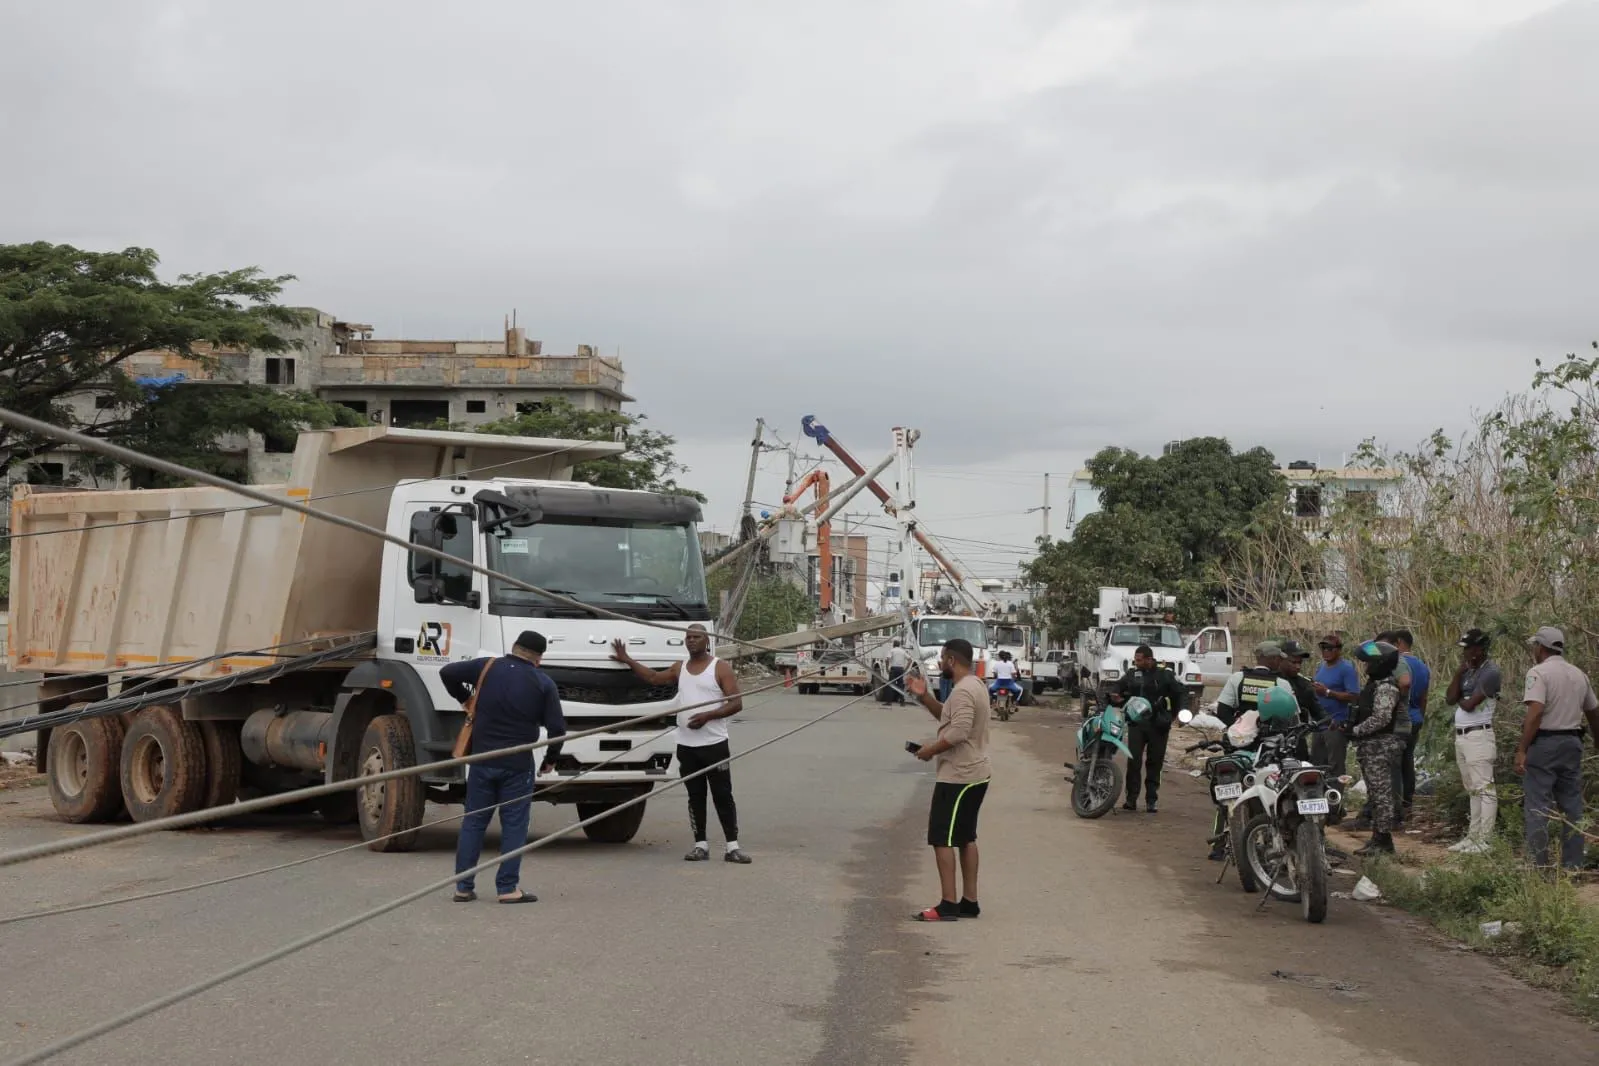 Edeeste trabaja para daños causados por un camión que derribó 23 postes en autopista San Isidro